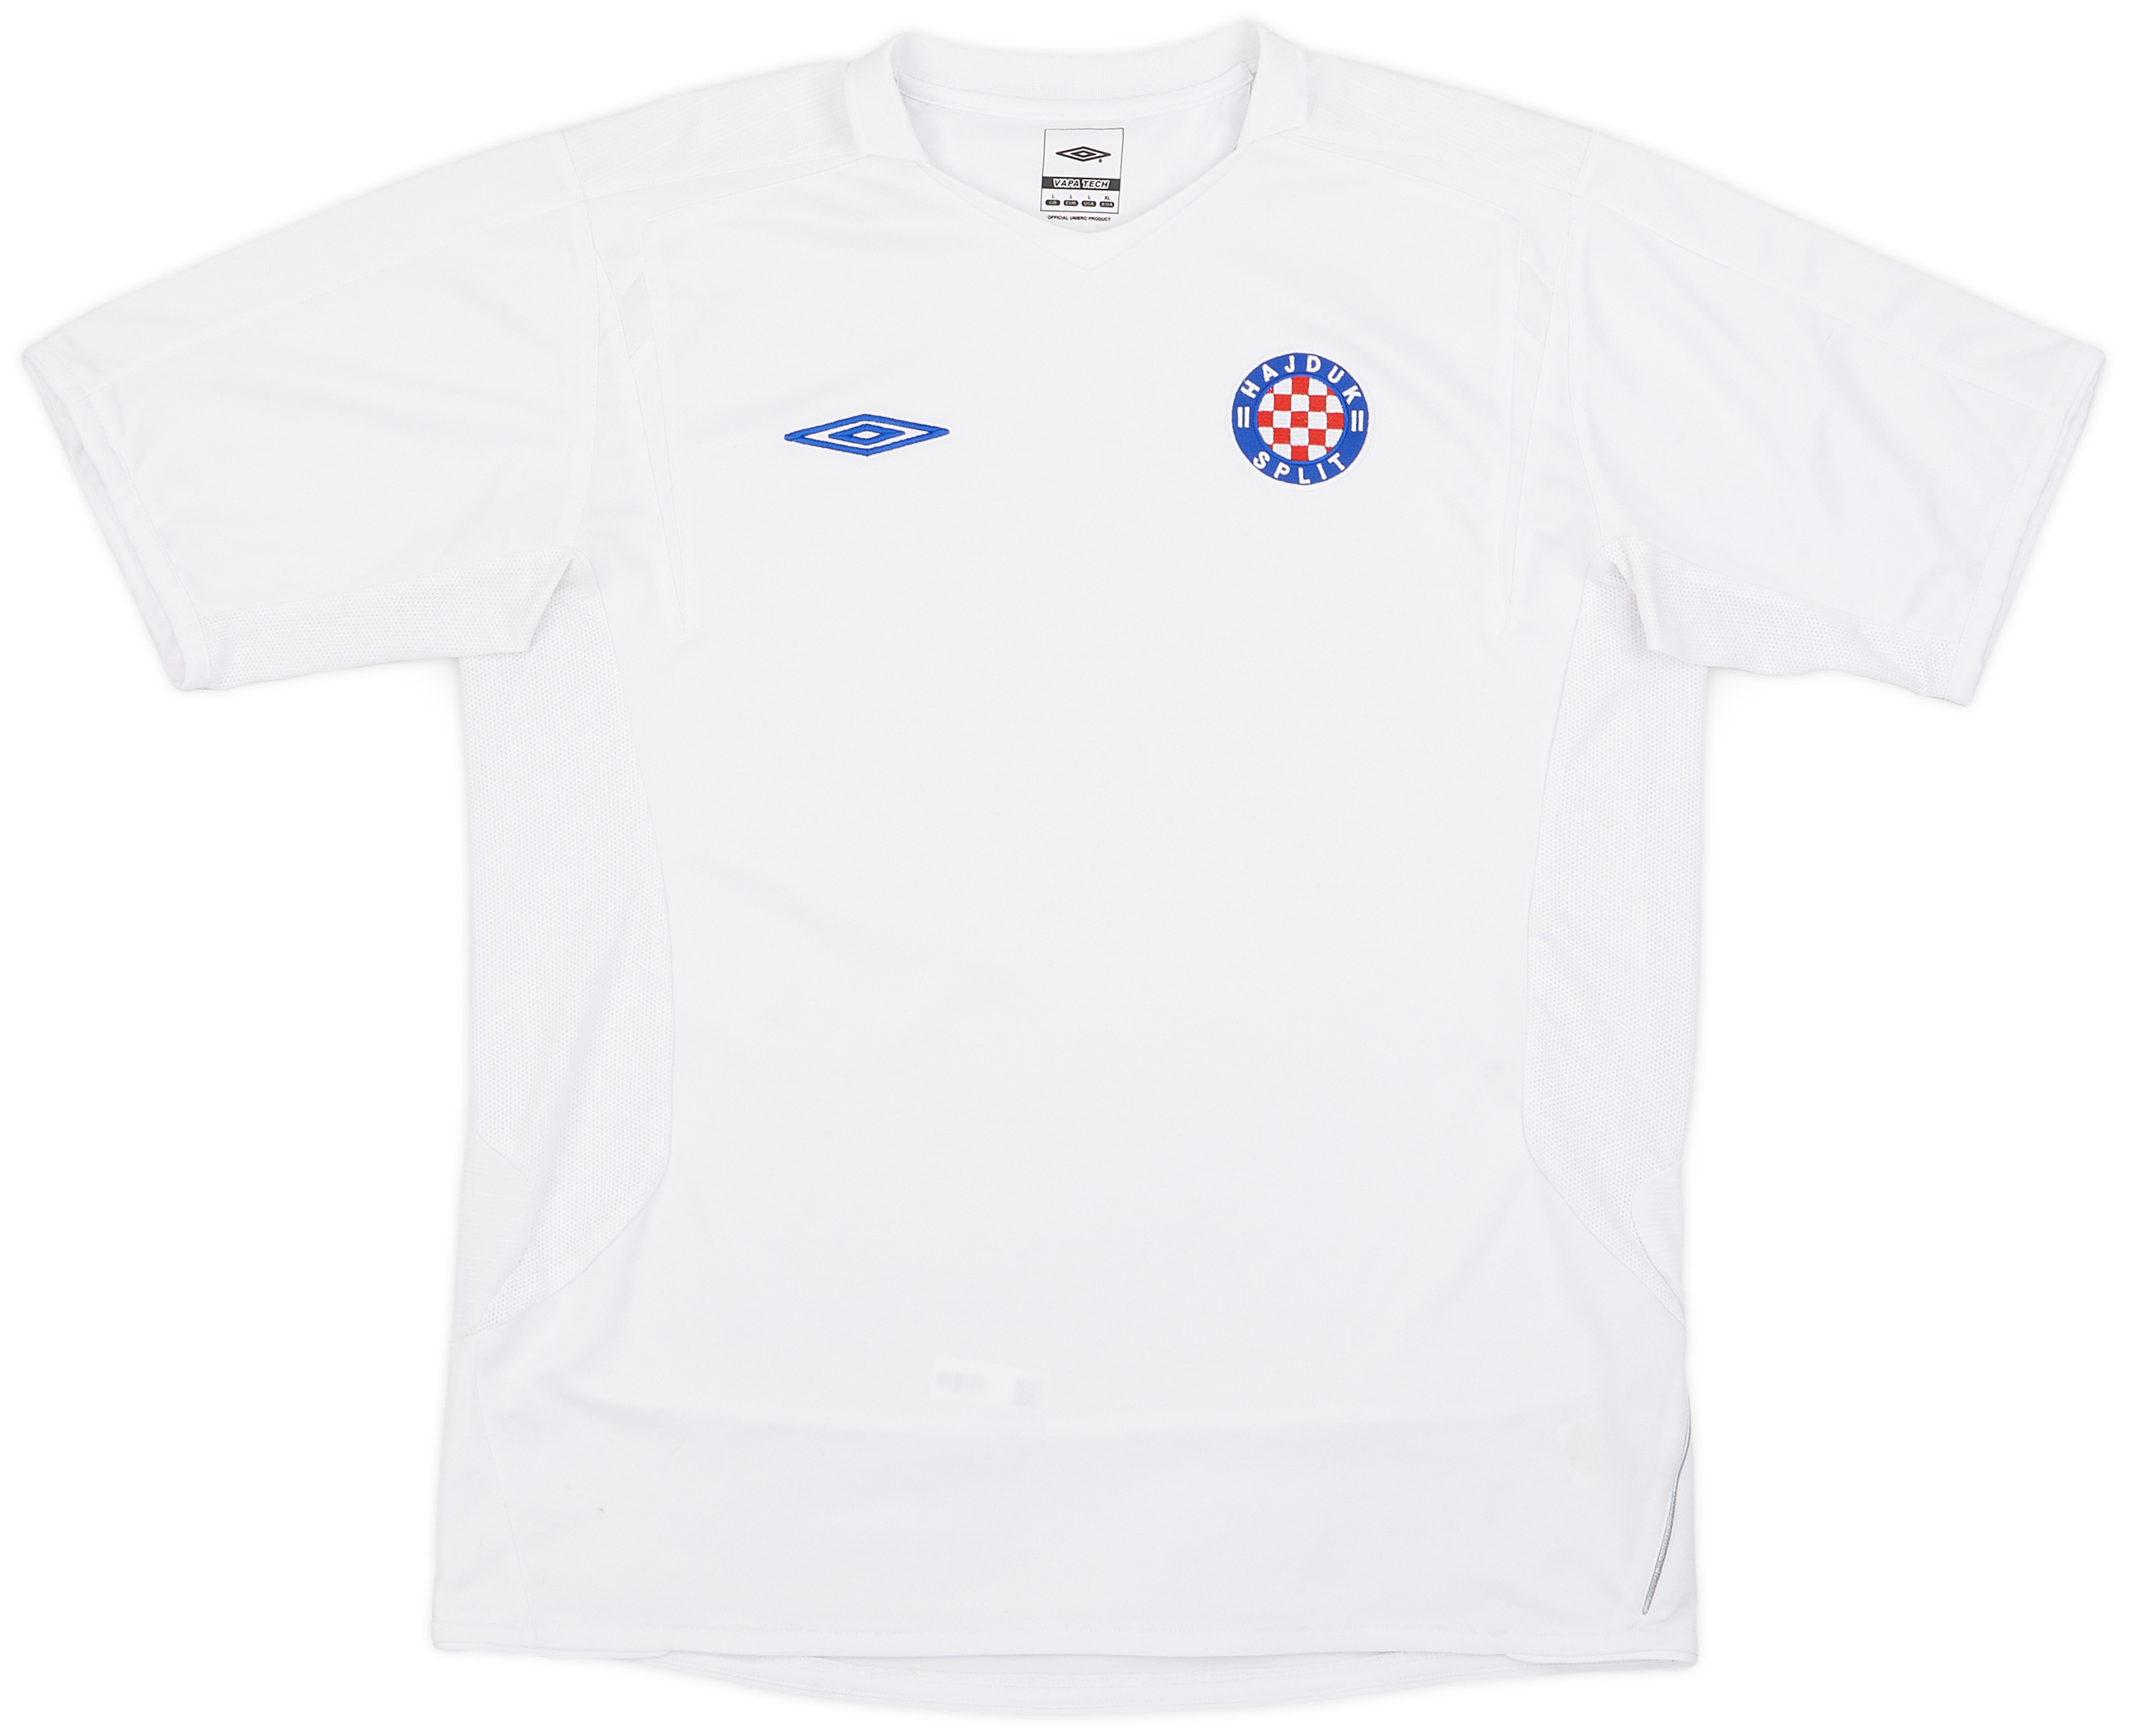 Hajduk Split  home shirt  (Original)